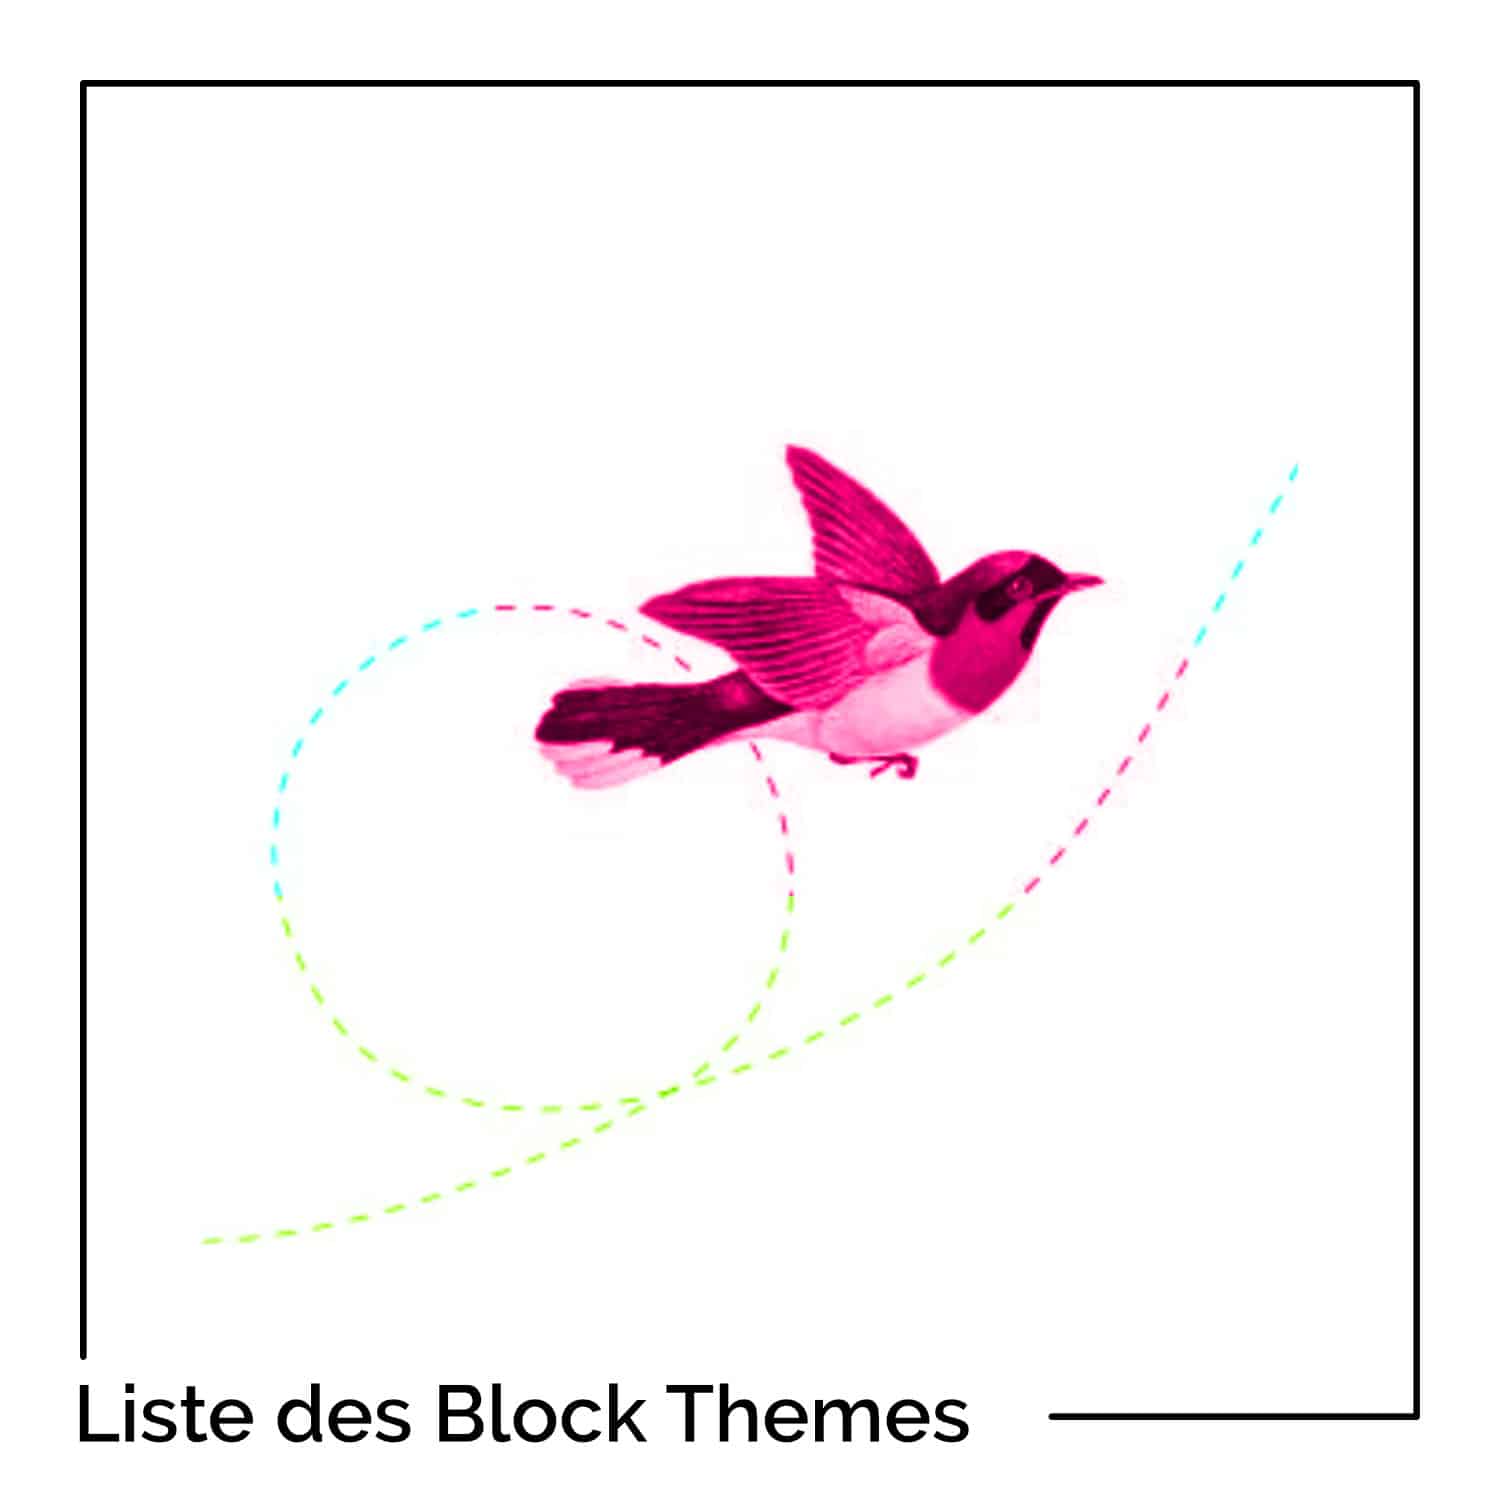 block theme liste